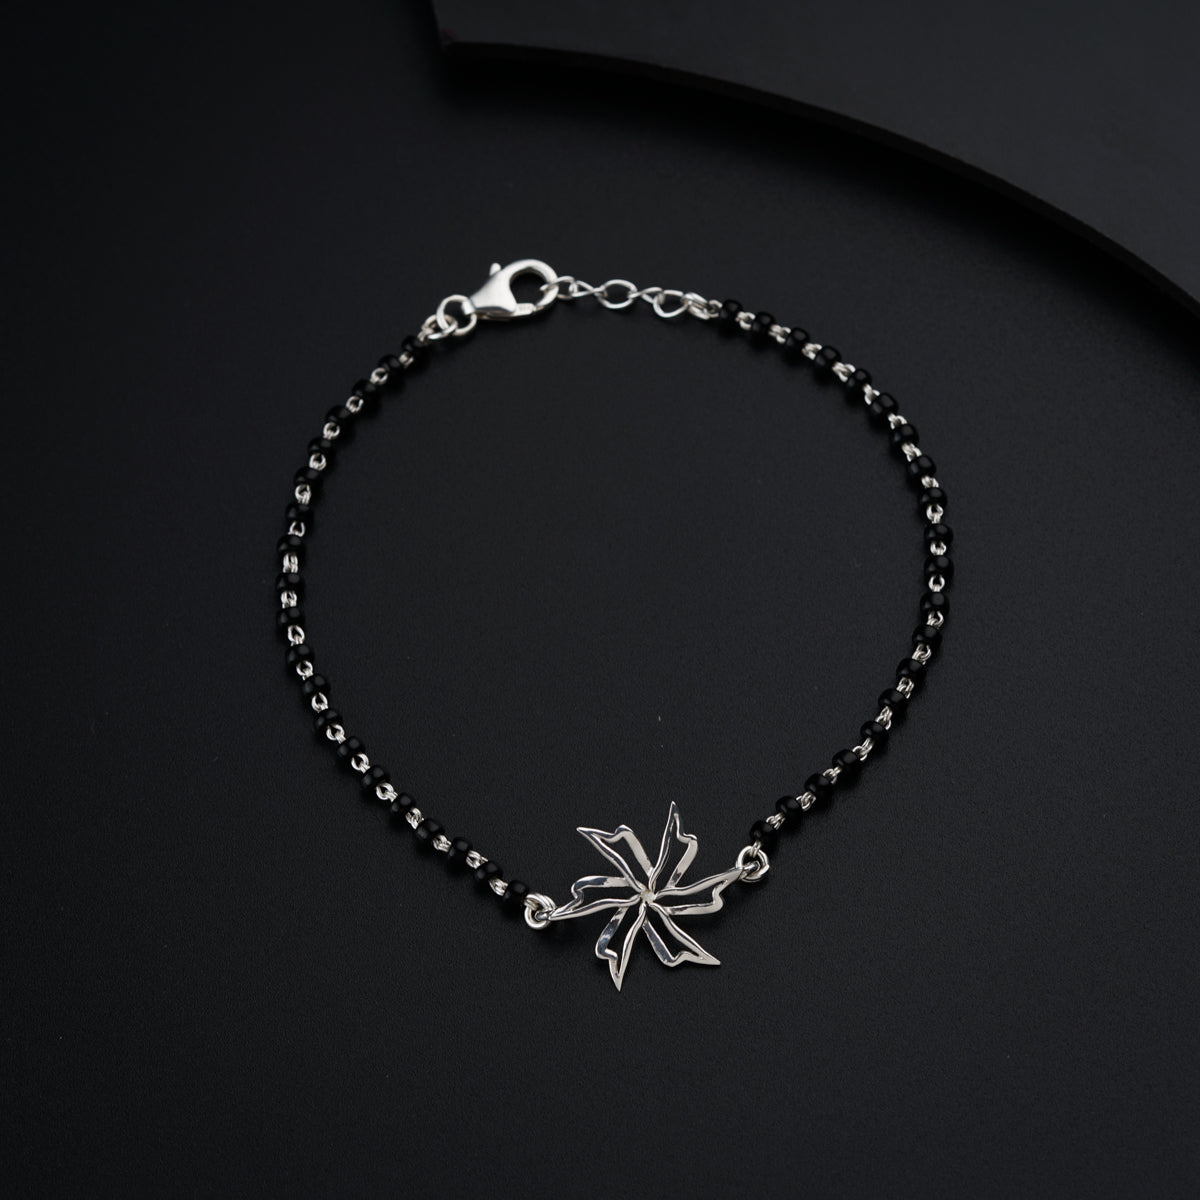 a black beaded bracelet with a silver leaf charm